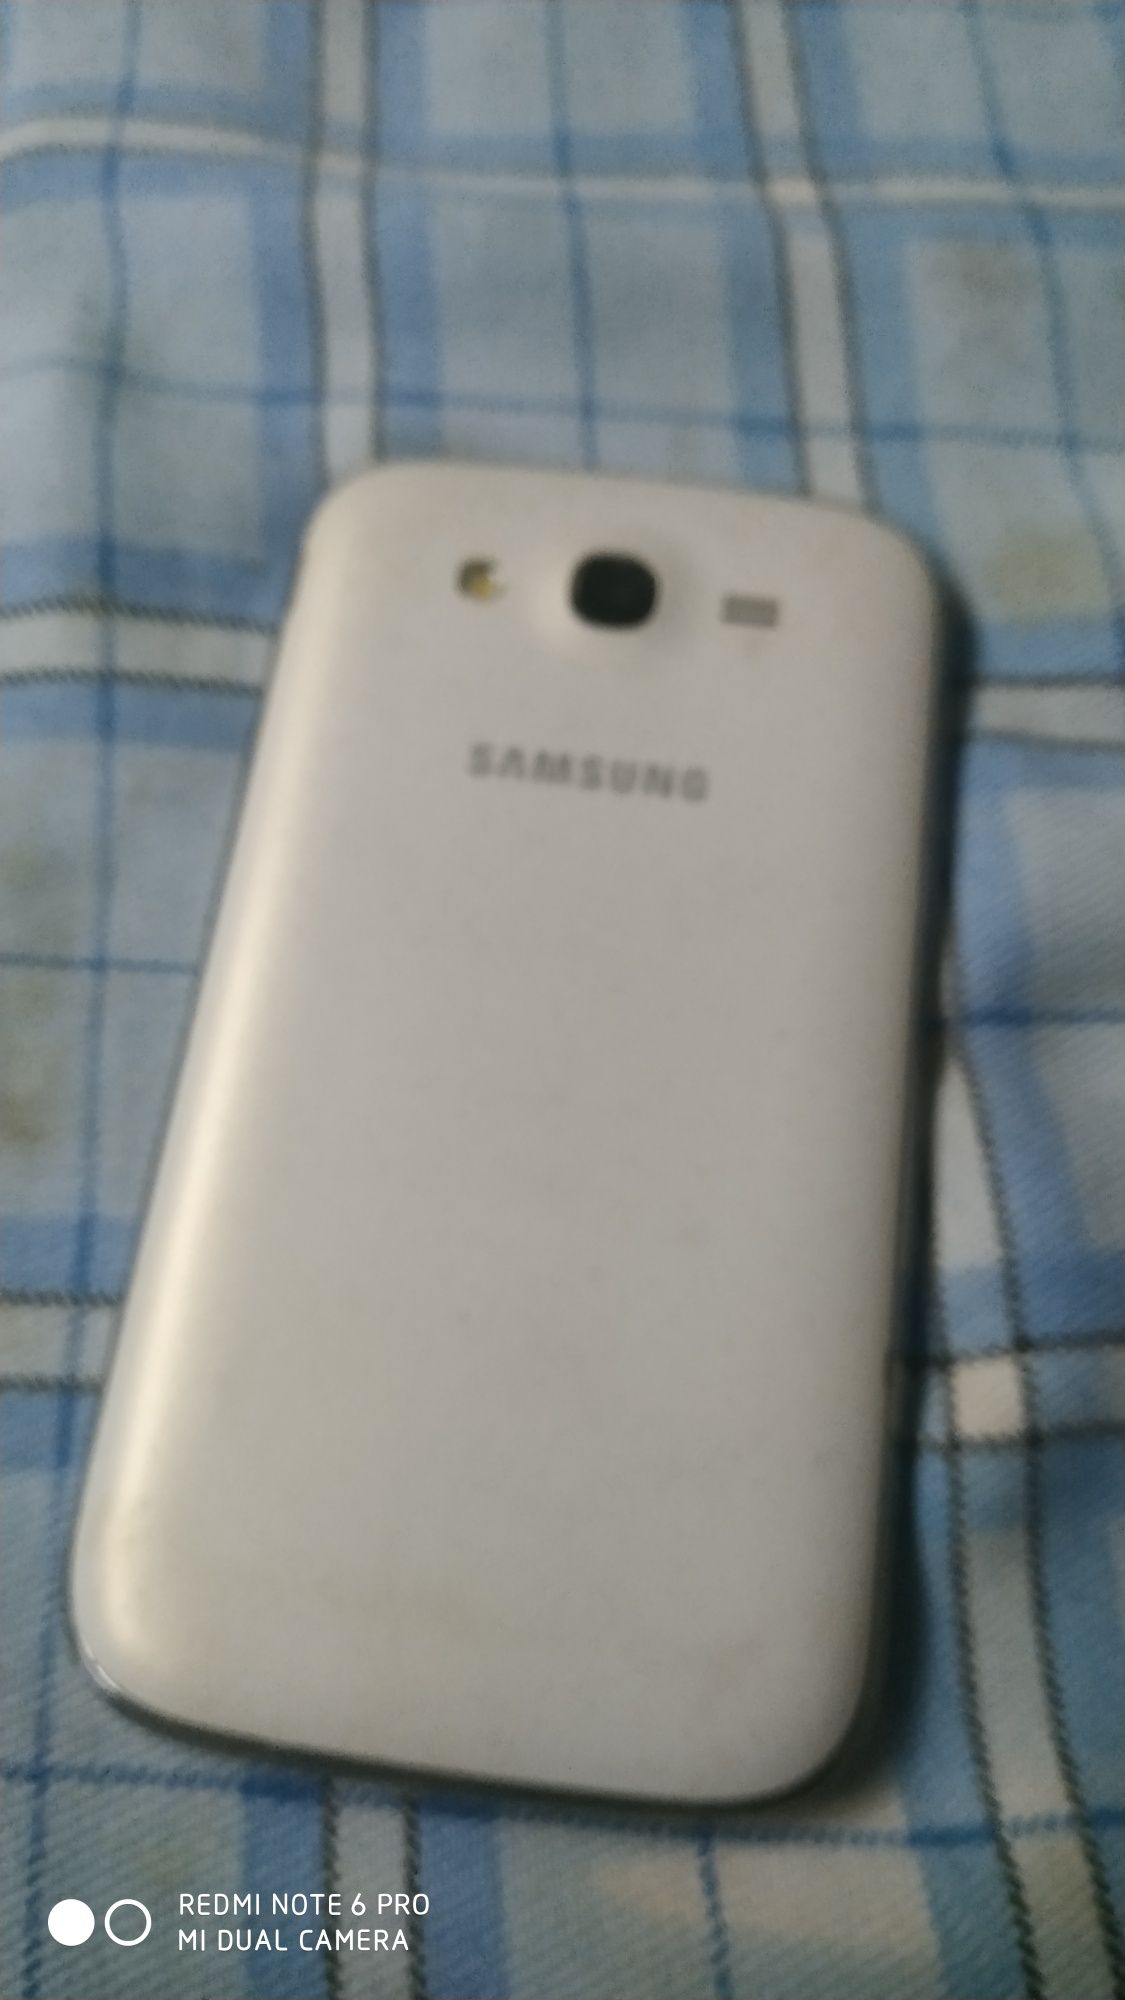 Vendo telemóveis Samsung